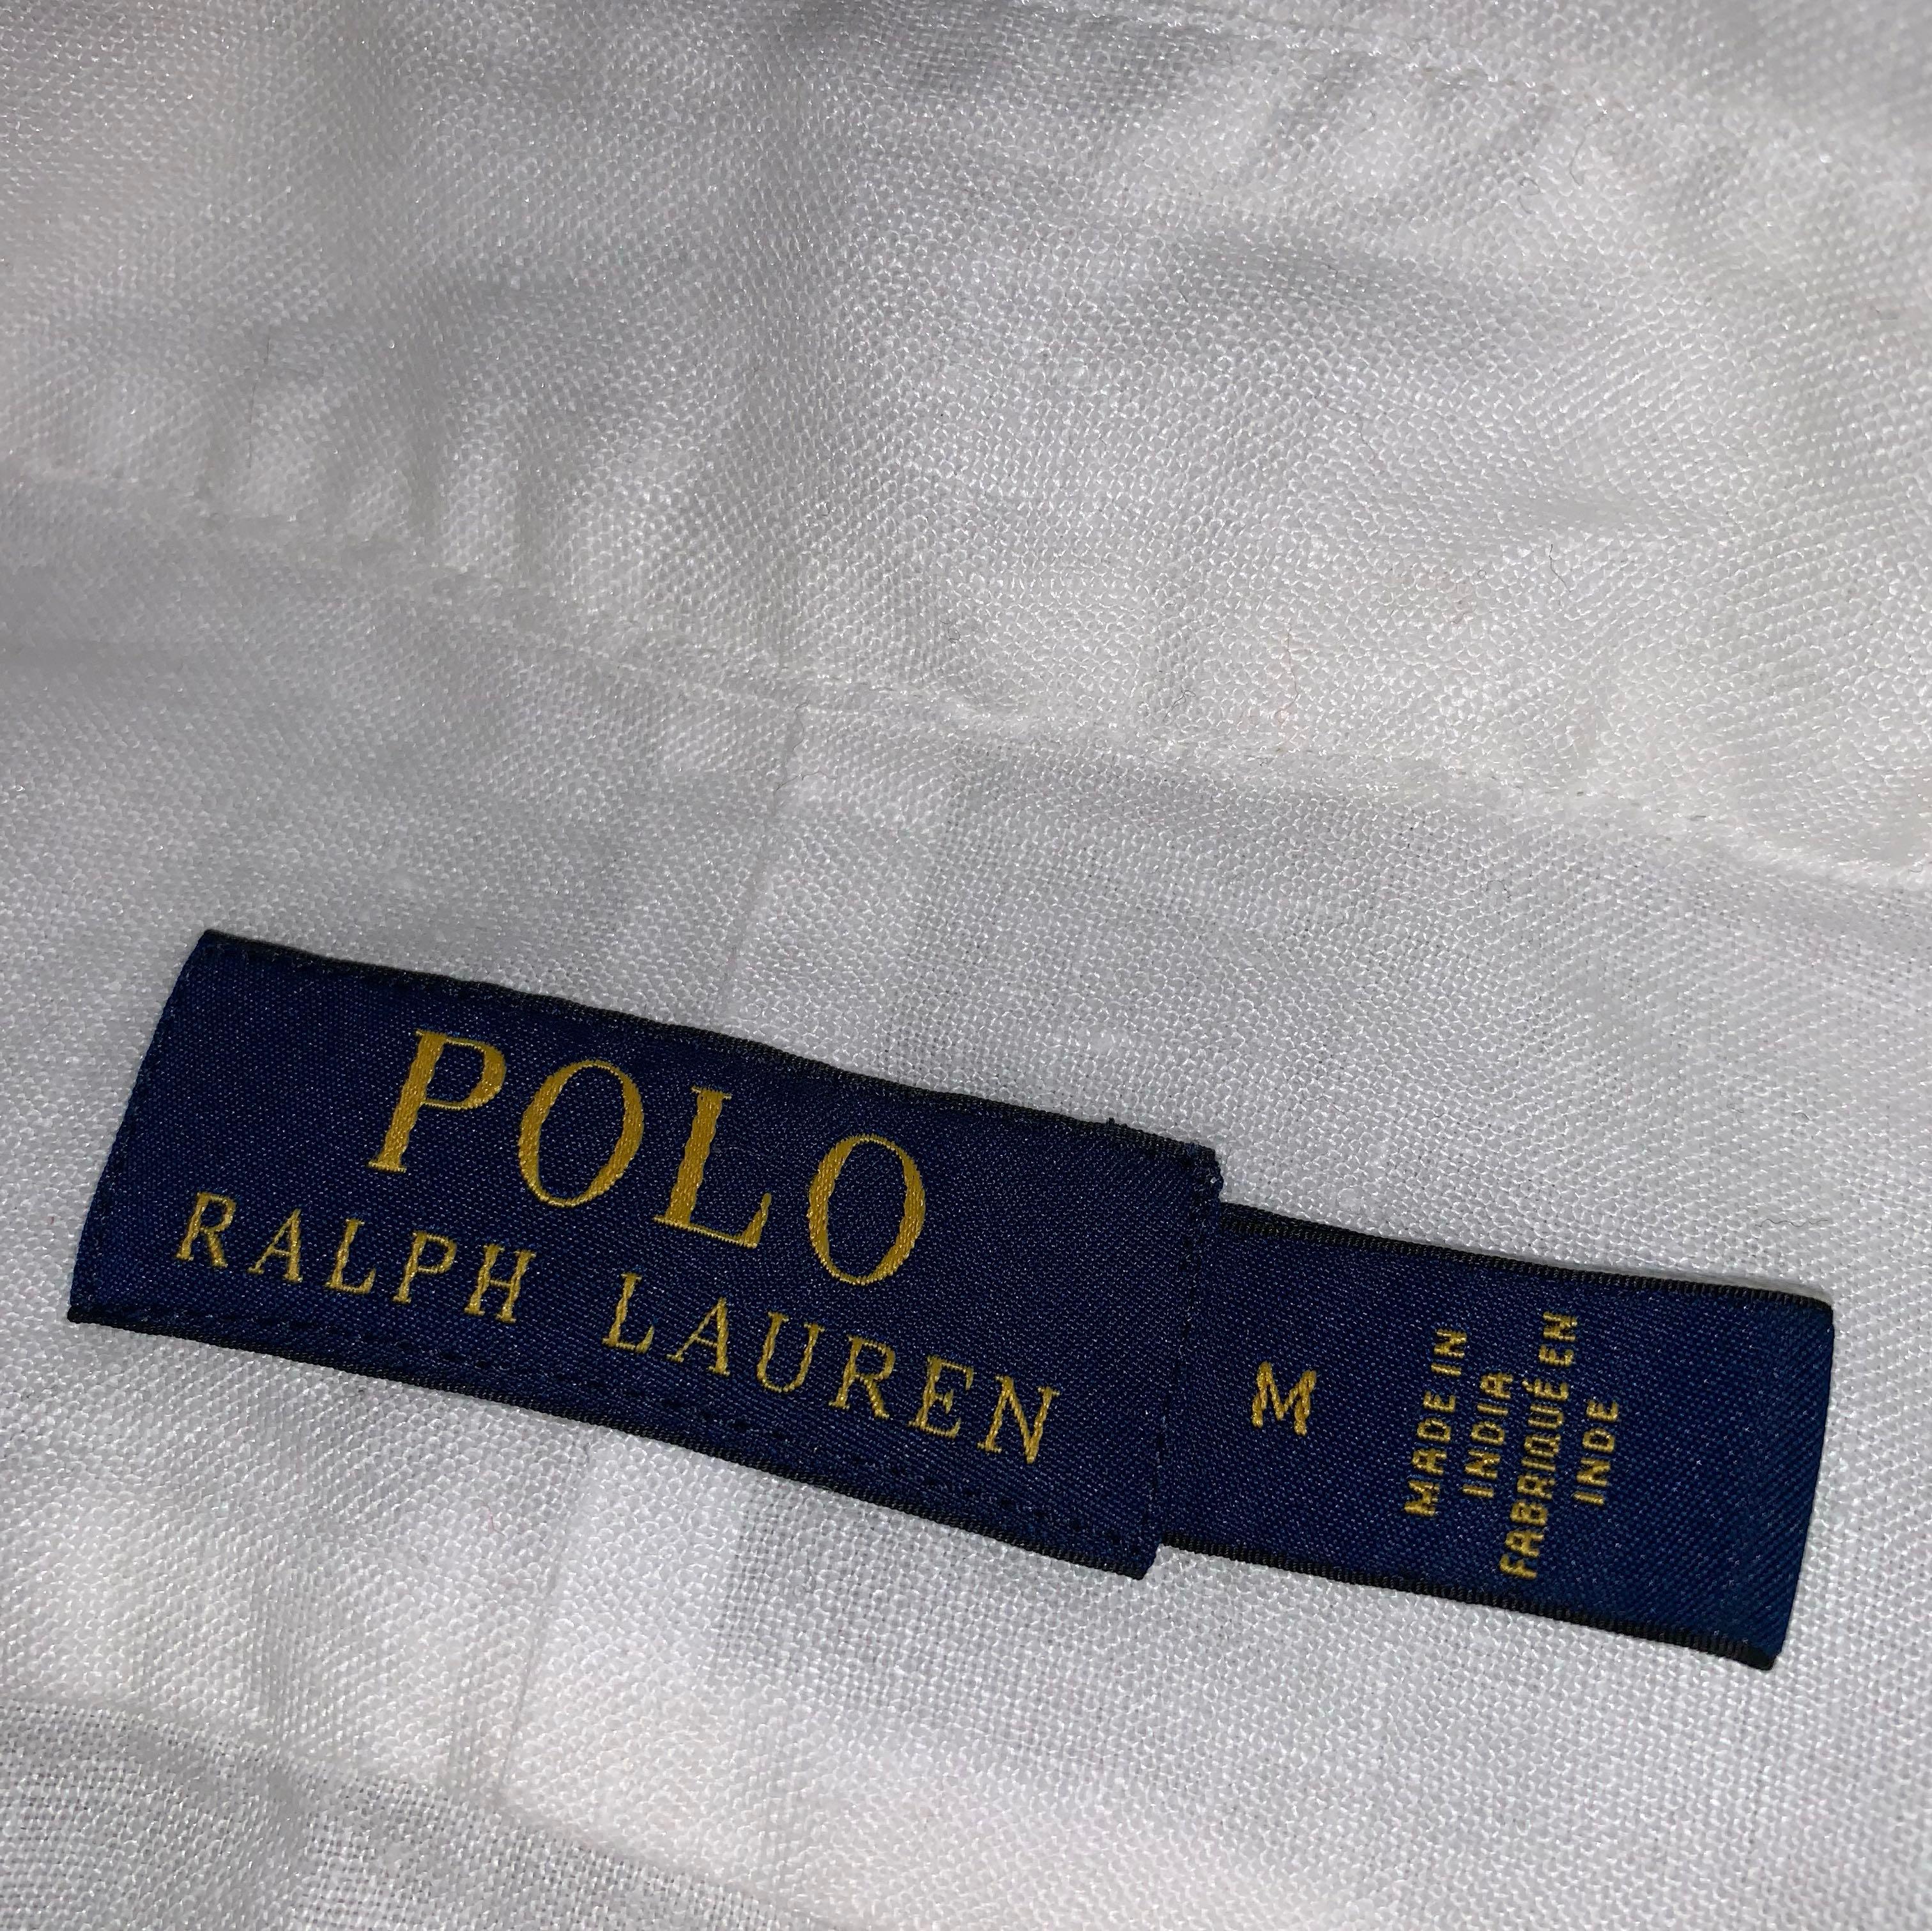 authentic polo ralph lauren tags